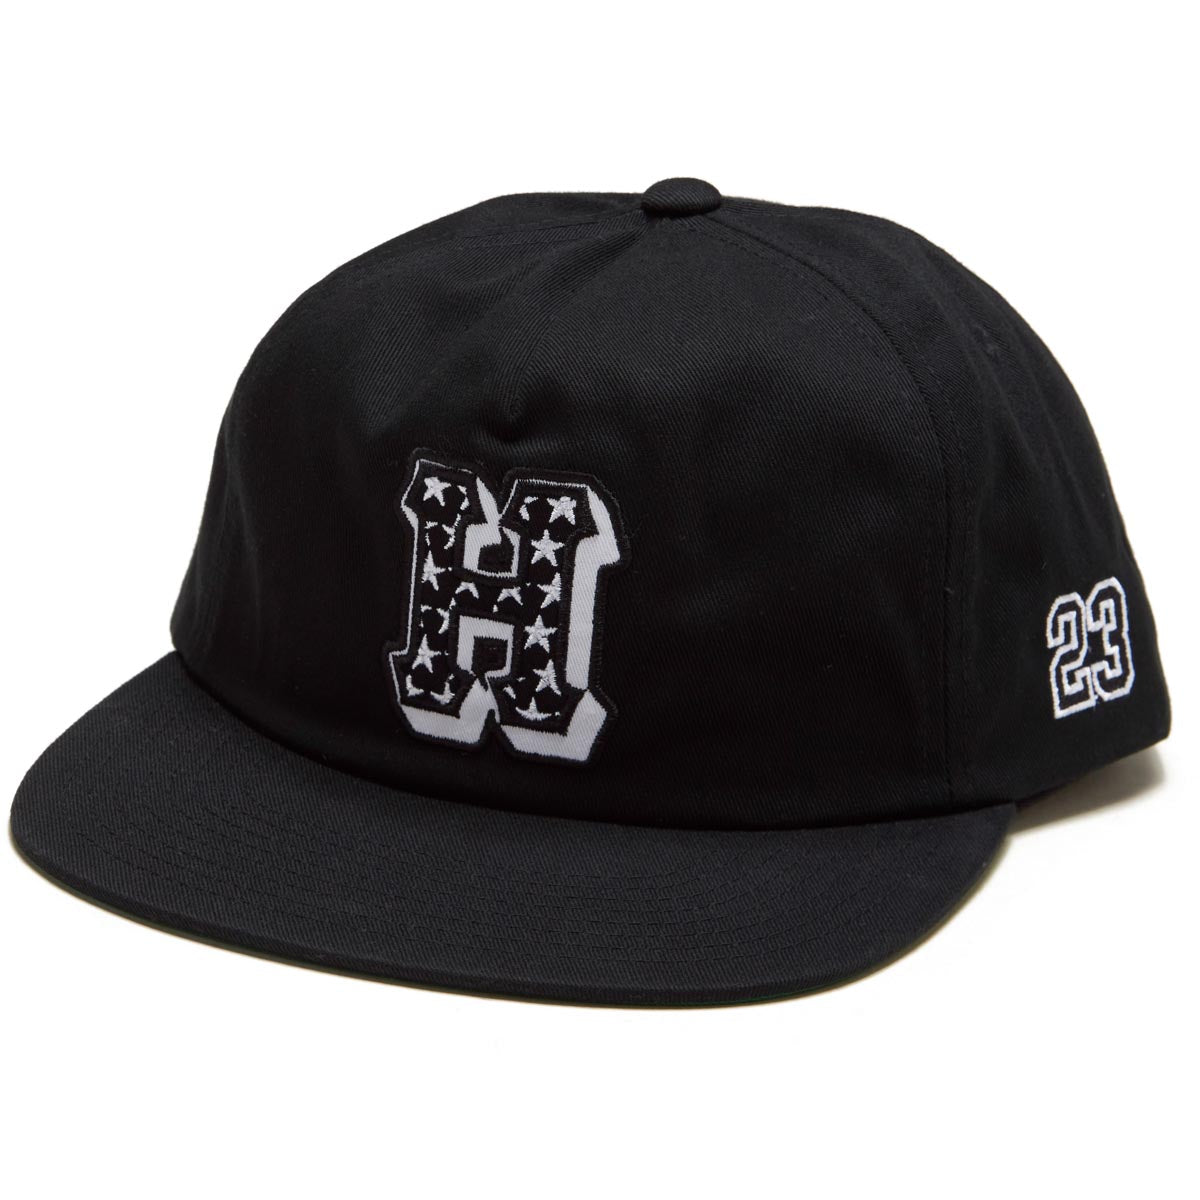 HUF H-star Snapback Hat - Black image 1